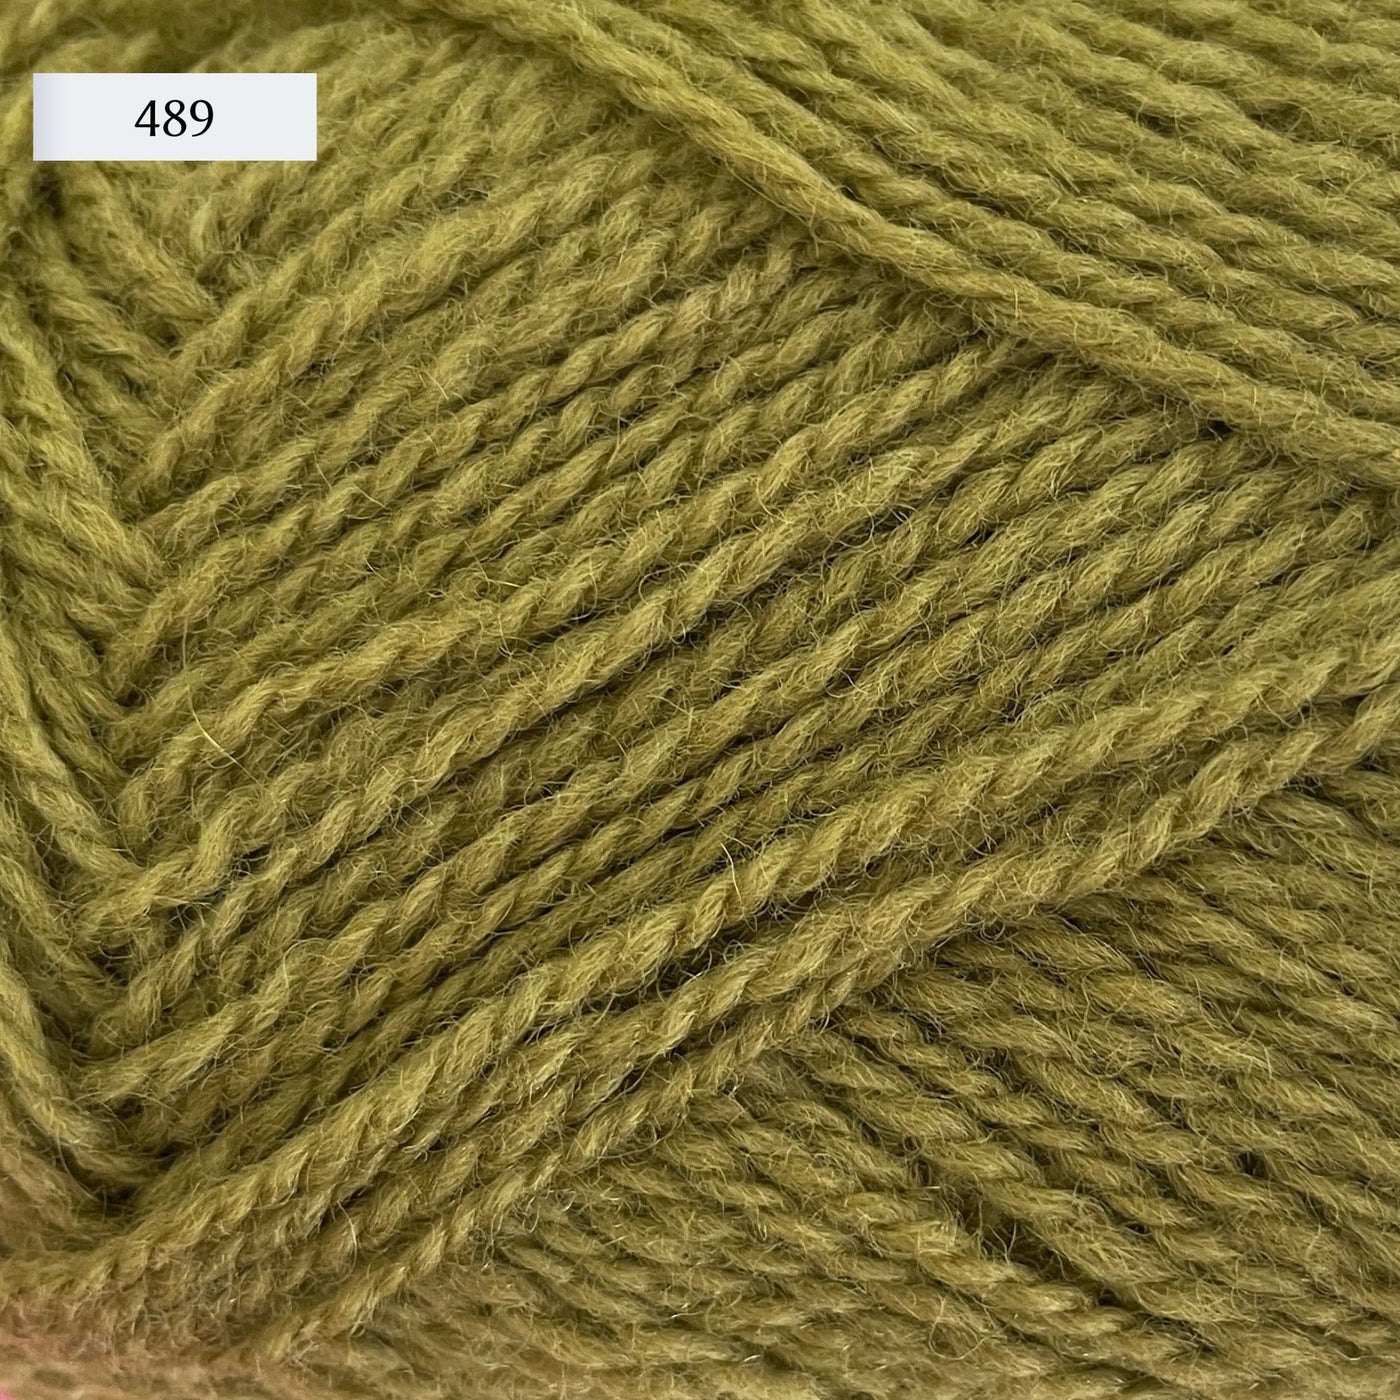 Rauma Finullgarn, a fingering/sport weight yarn, in color 489, light khaki green